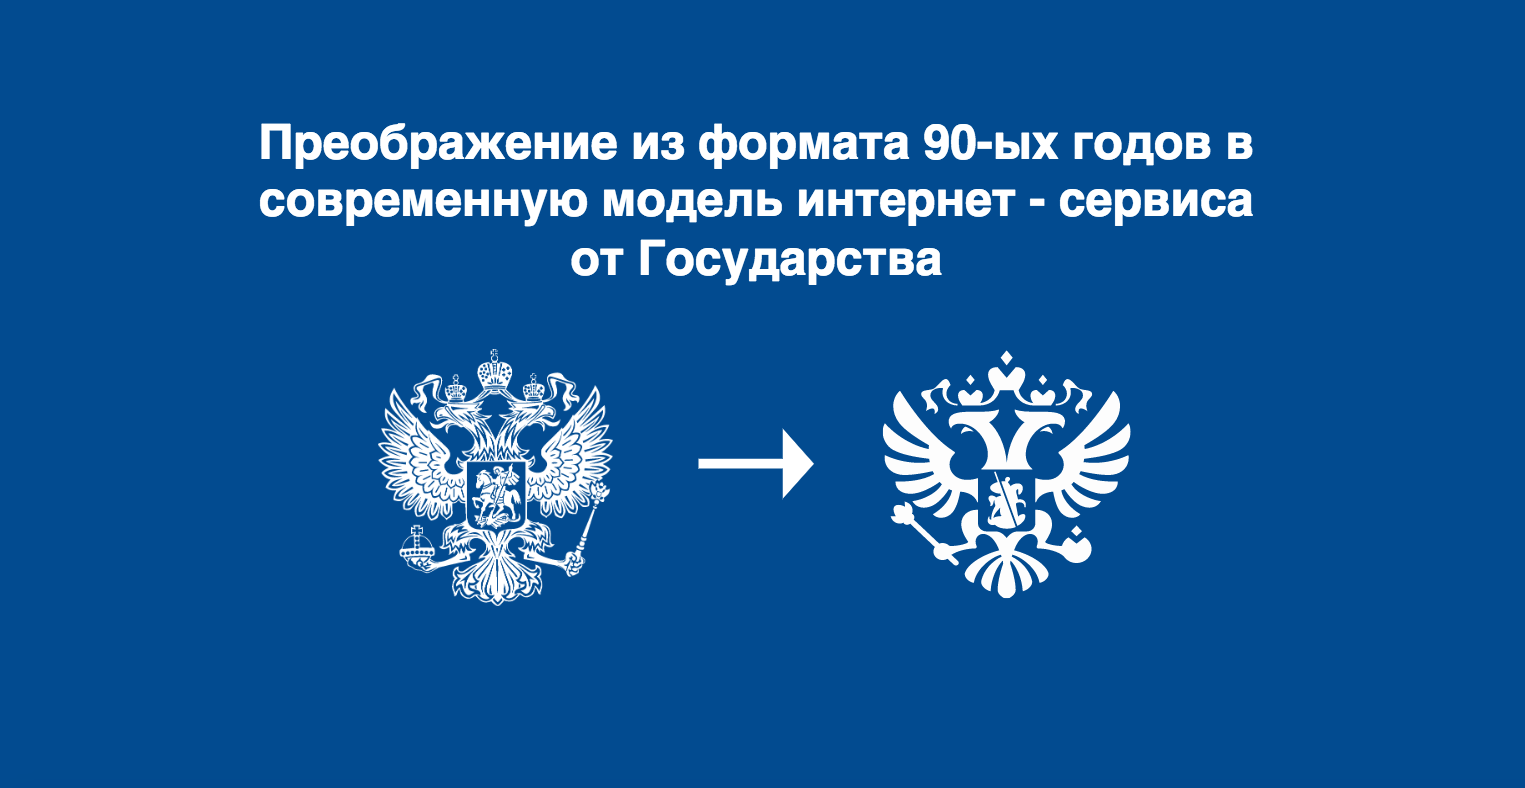 Иллюстрация официального герба РФ (слайд из презентации Минкомсвязи)